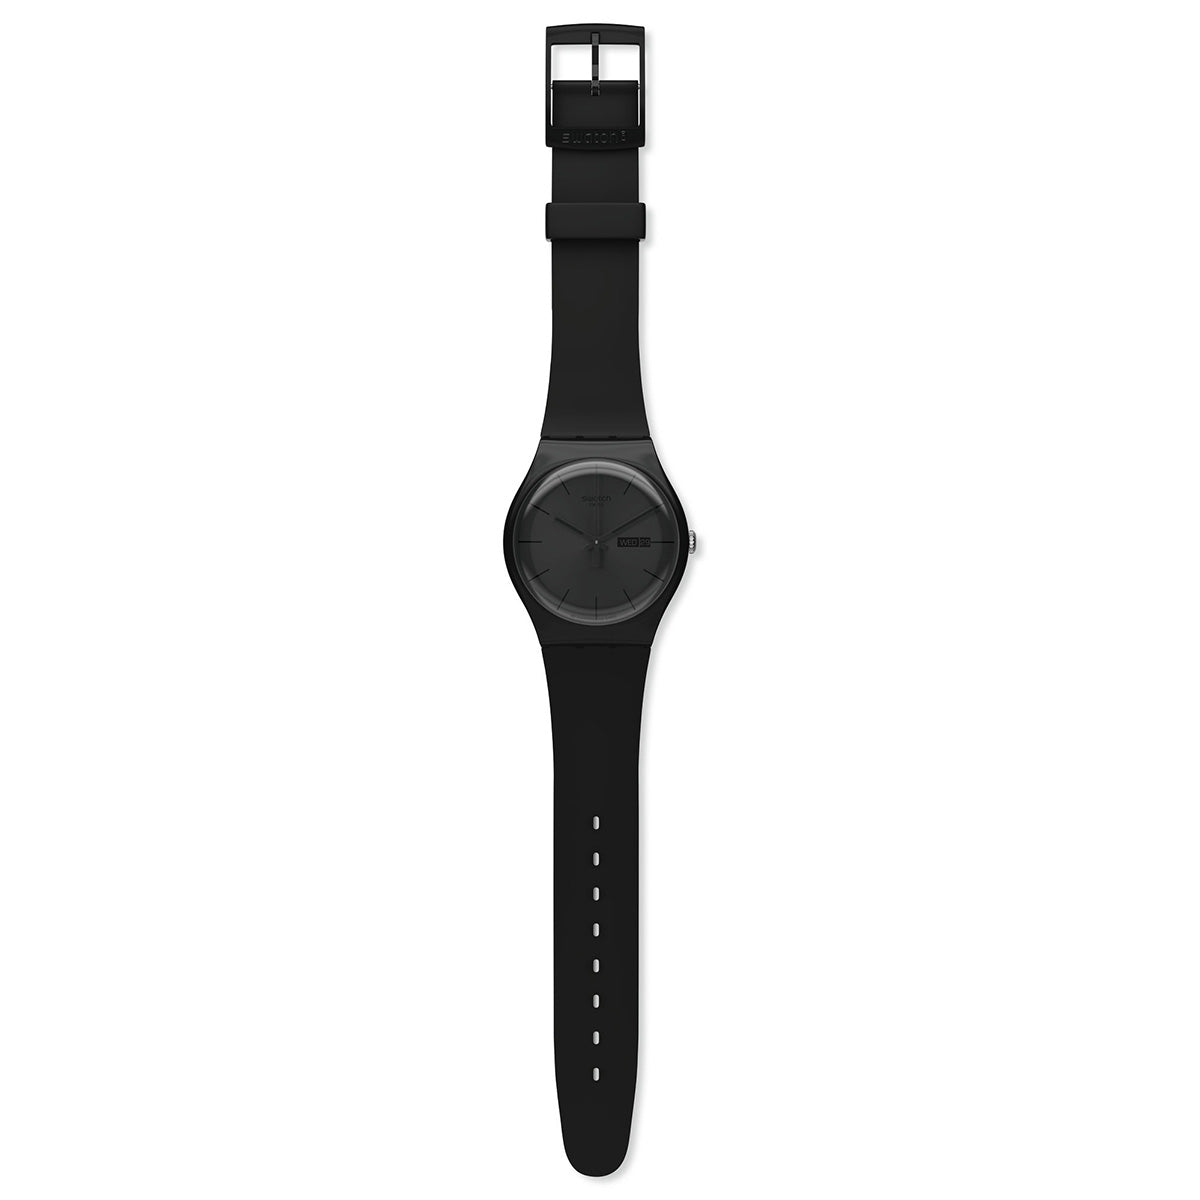 swatch スウォッチ 腕時計 メンズ レディース オリジナルズ ニュージェント ブラック・レーベル Originals New Gent BLACK REBEL SO29B706